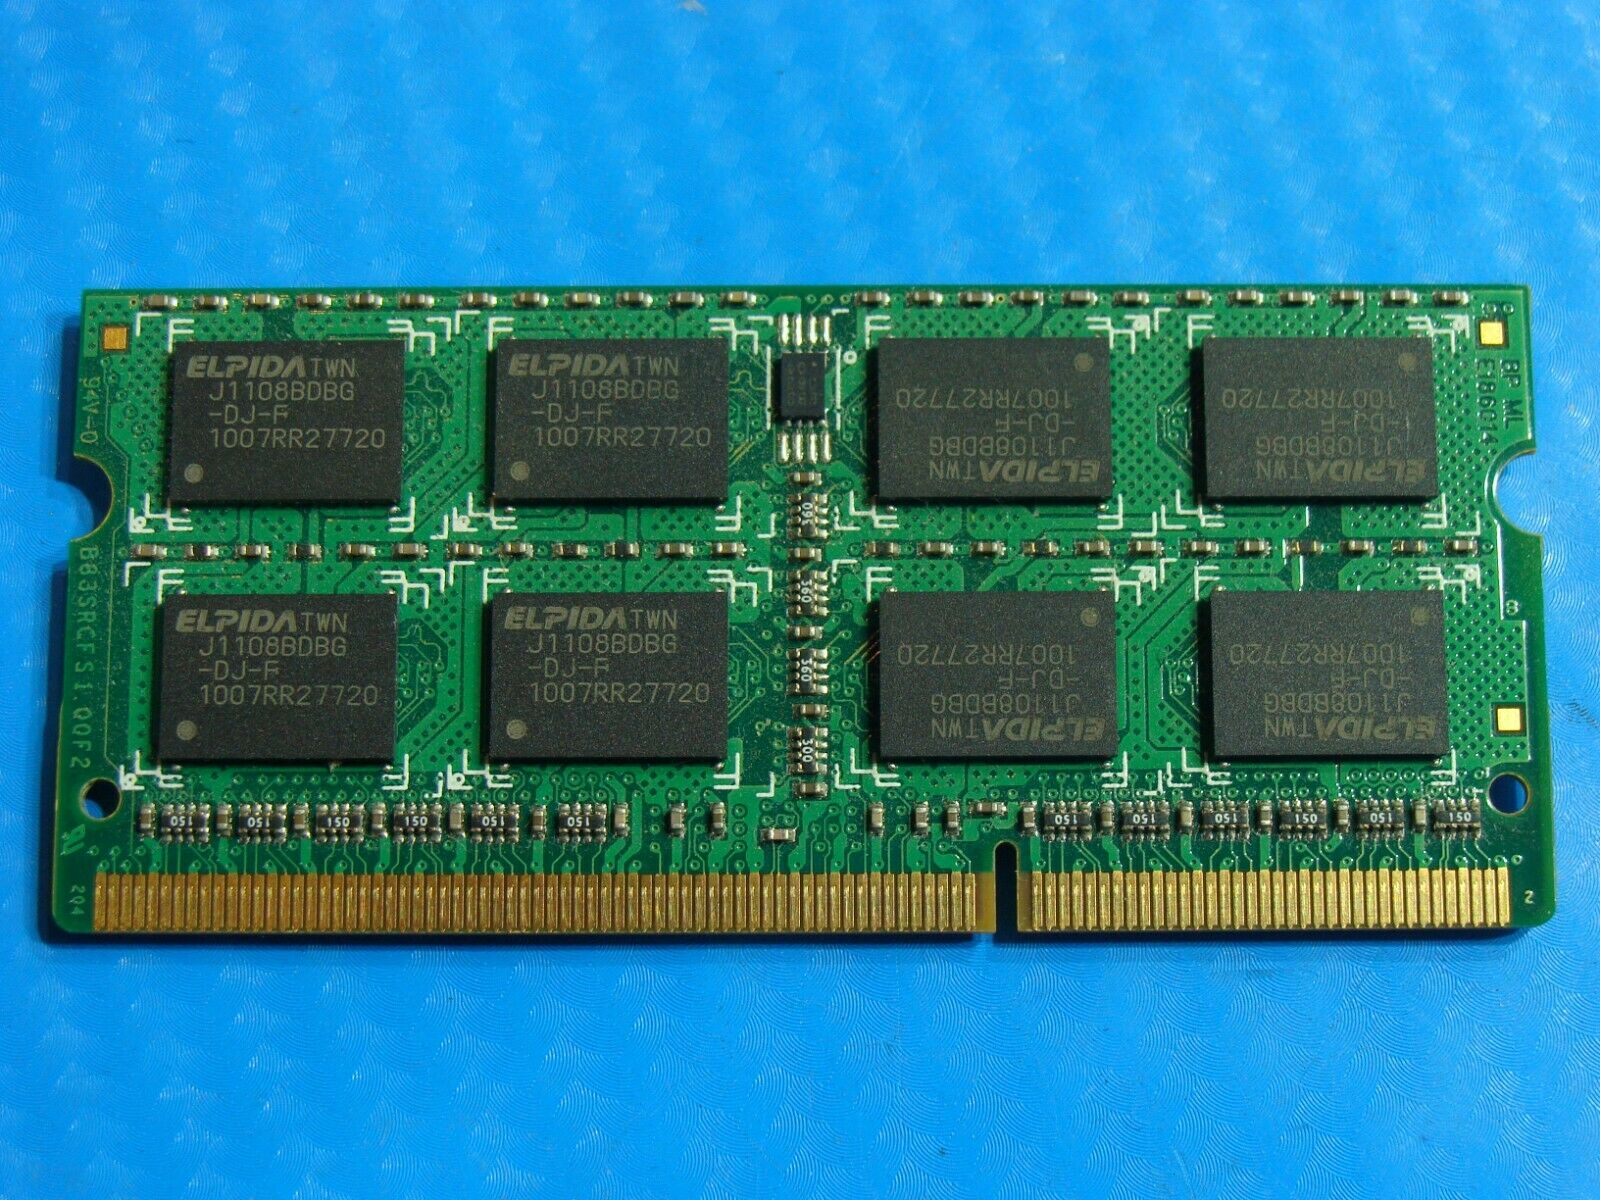 Sony PCG-71312L ADATA 2GB 2Rx8 PC3-8500S SO-DIMM Memory RAM EL7YG1B1672ZG #1 - Laptop Parts - Buy Authentic Computer Parts - Top Seller Ebay